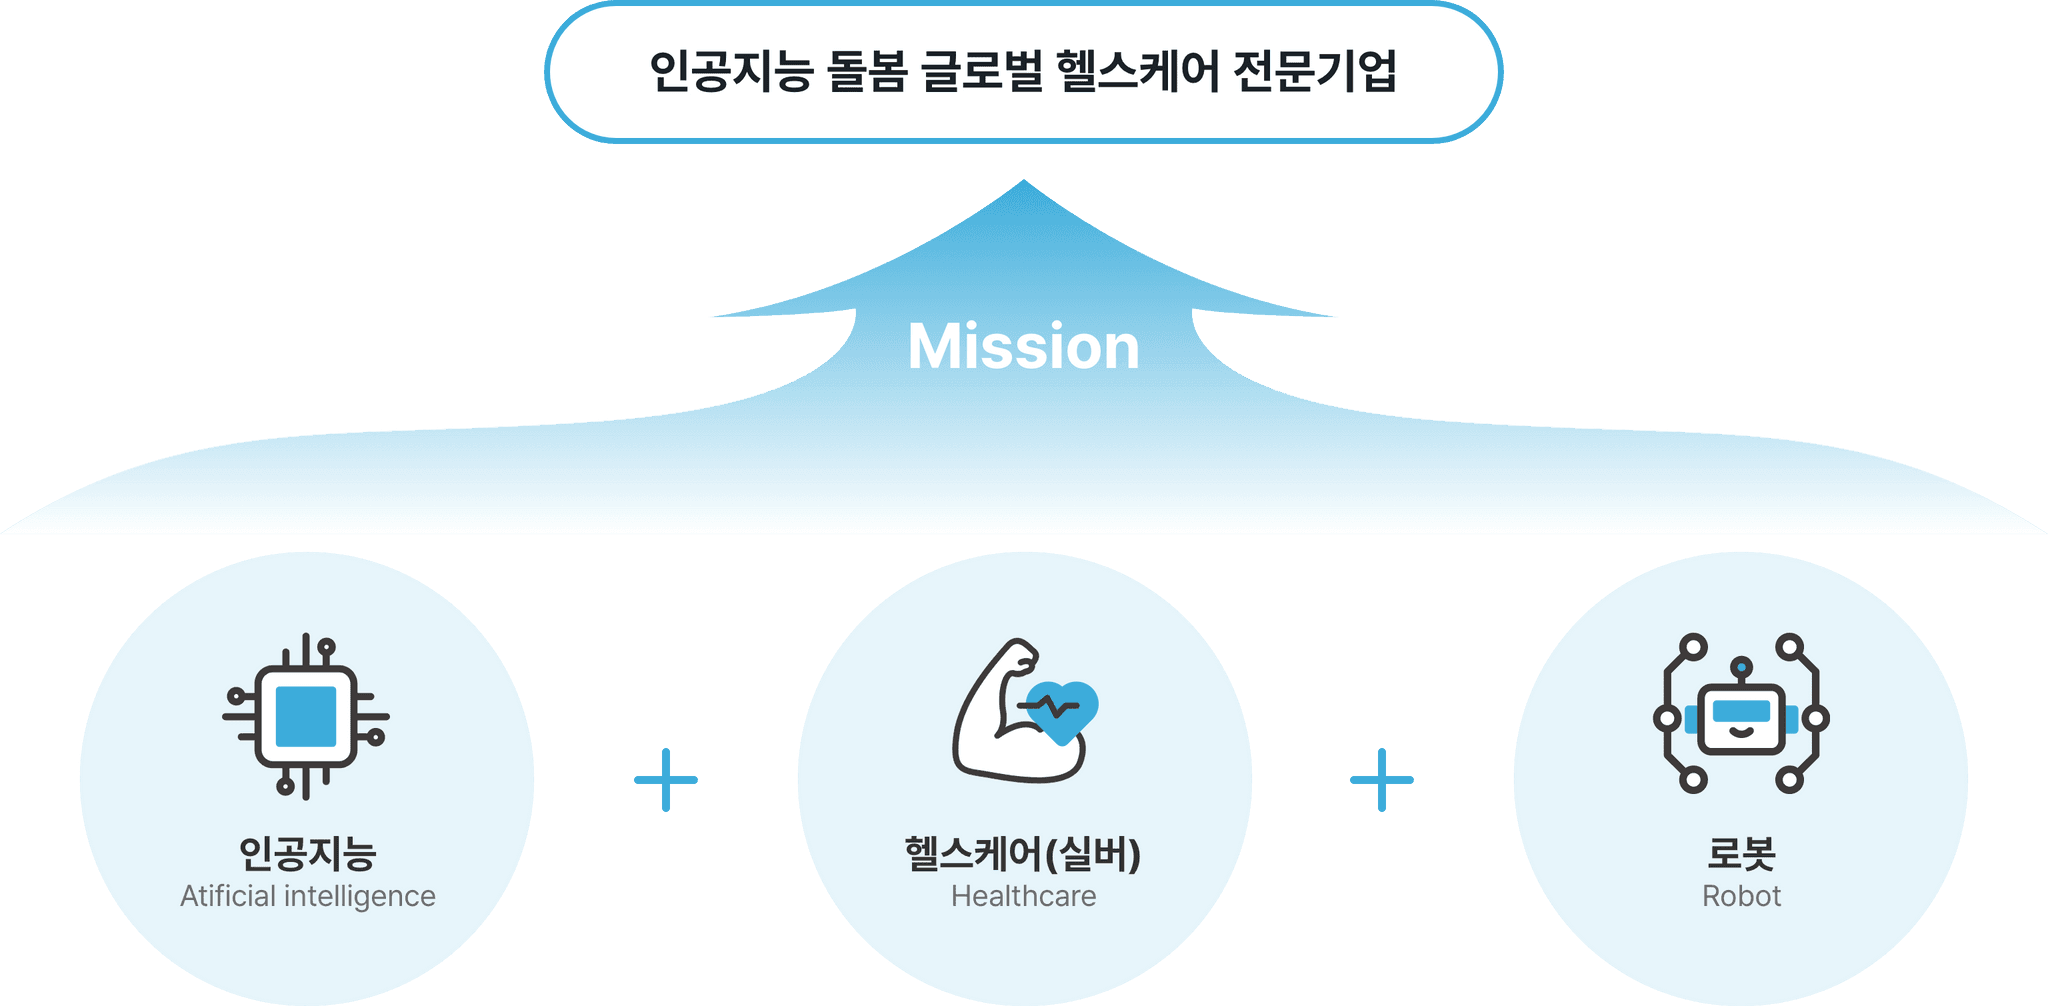 1thefull mission